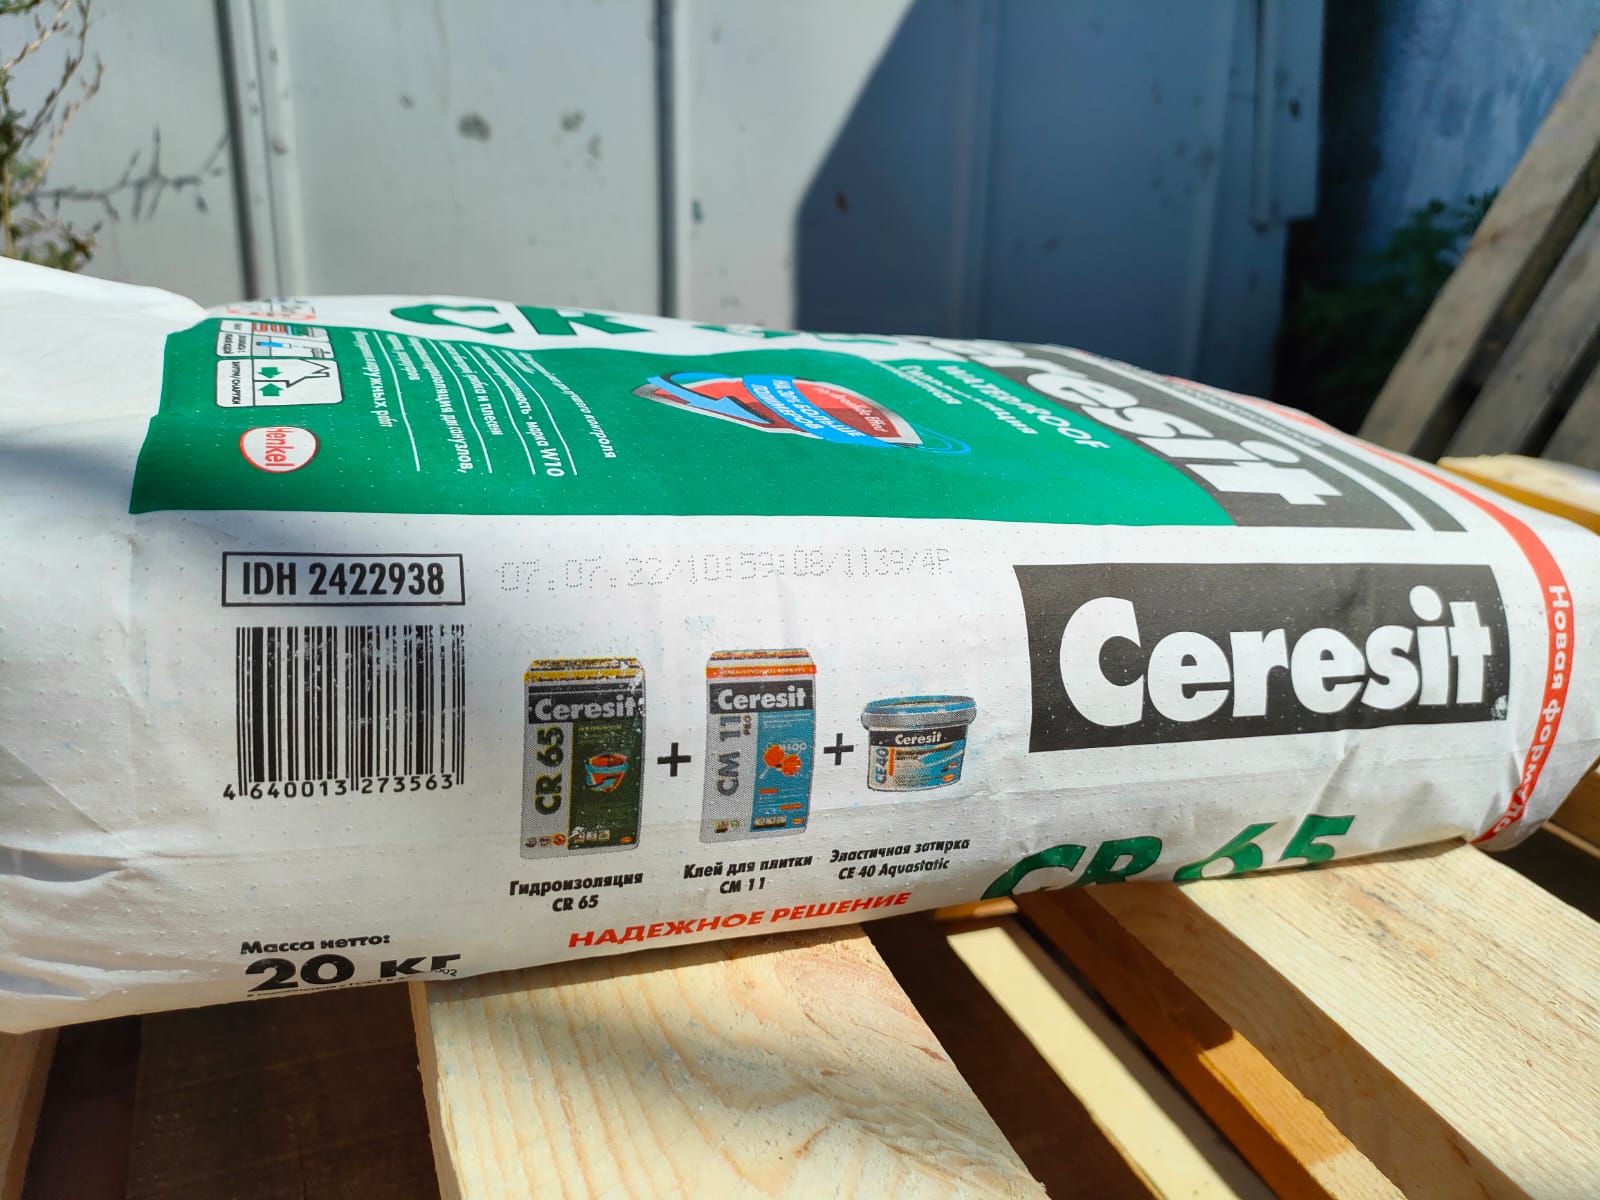 Гидроизоляция цементная Ceresit Waterproof CR 65 20 кг